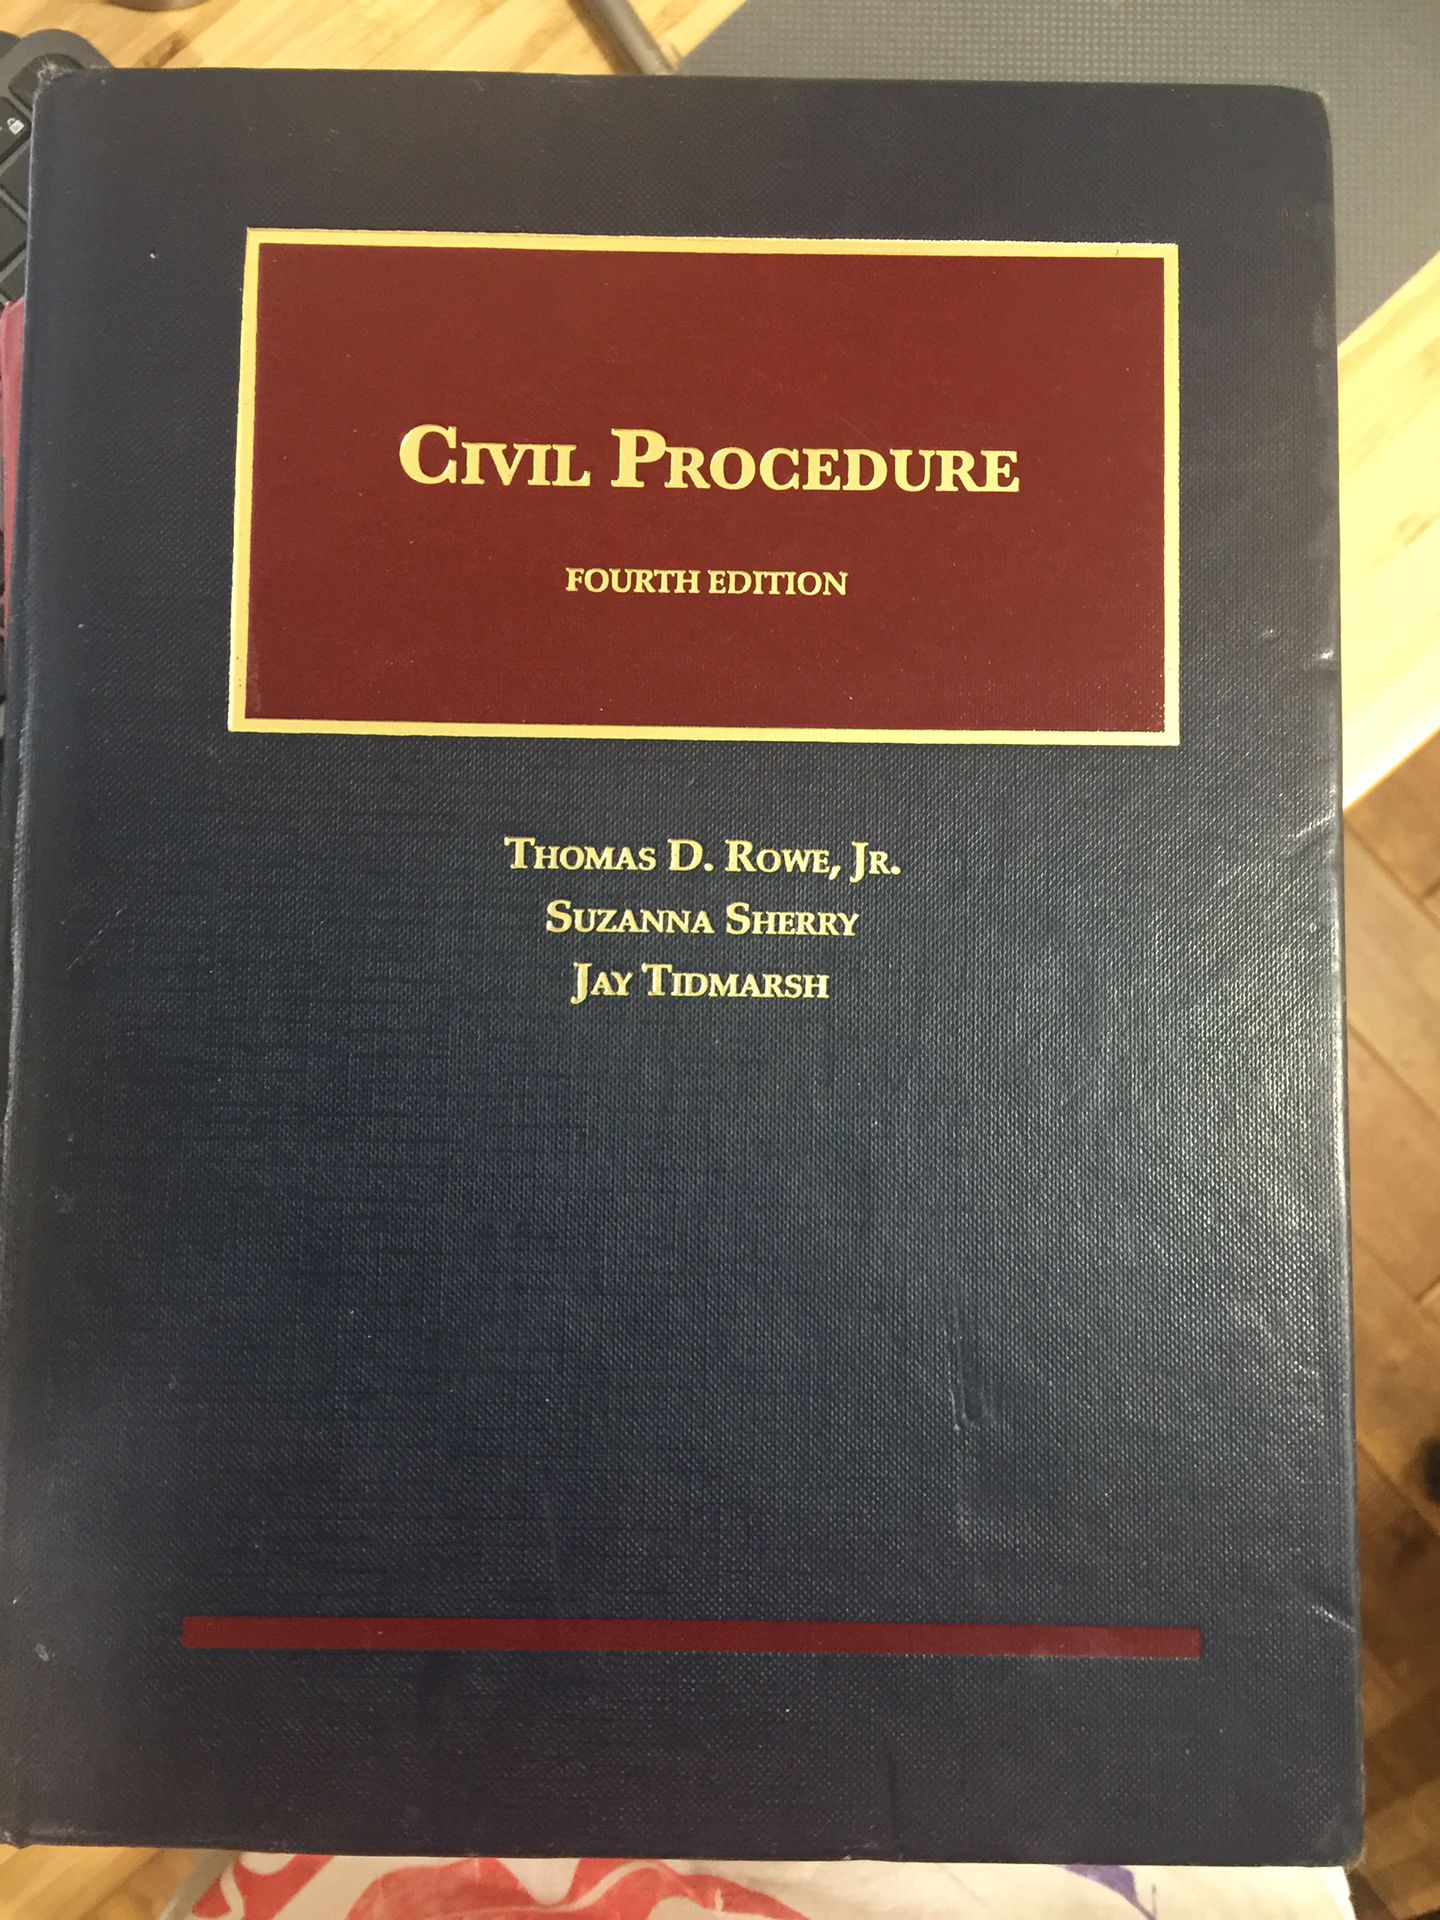 Civil Procedure Casebook, 4th Edition, Thomas D. Rowe Jr., Suzanna Sherry, Jay Tidmarsh